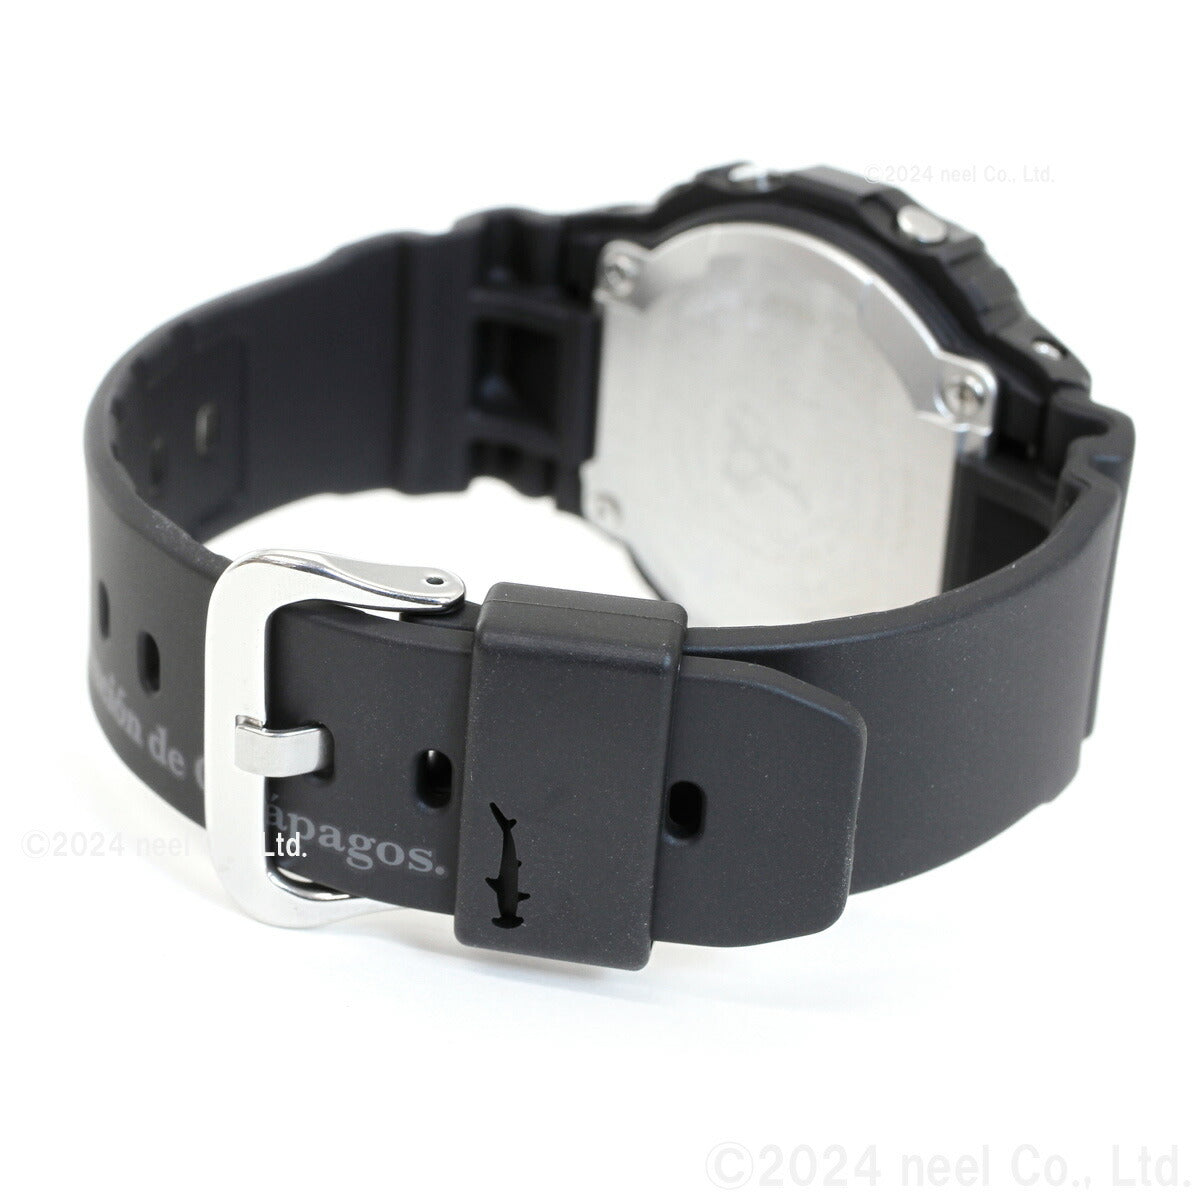 G-SHOCK 電波 ソーラー 電波時計 カシオ Gショック CASIO デジタル 腕時計 メンズ GW-B5600CD-1A2JR チャールズ・ダーウィン財団 コラボモデル シュモクザメ